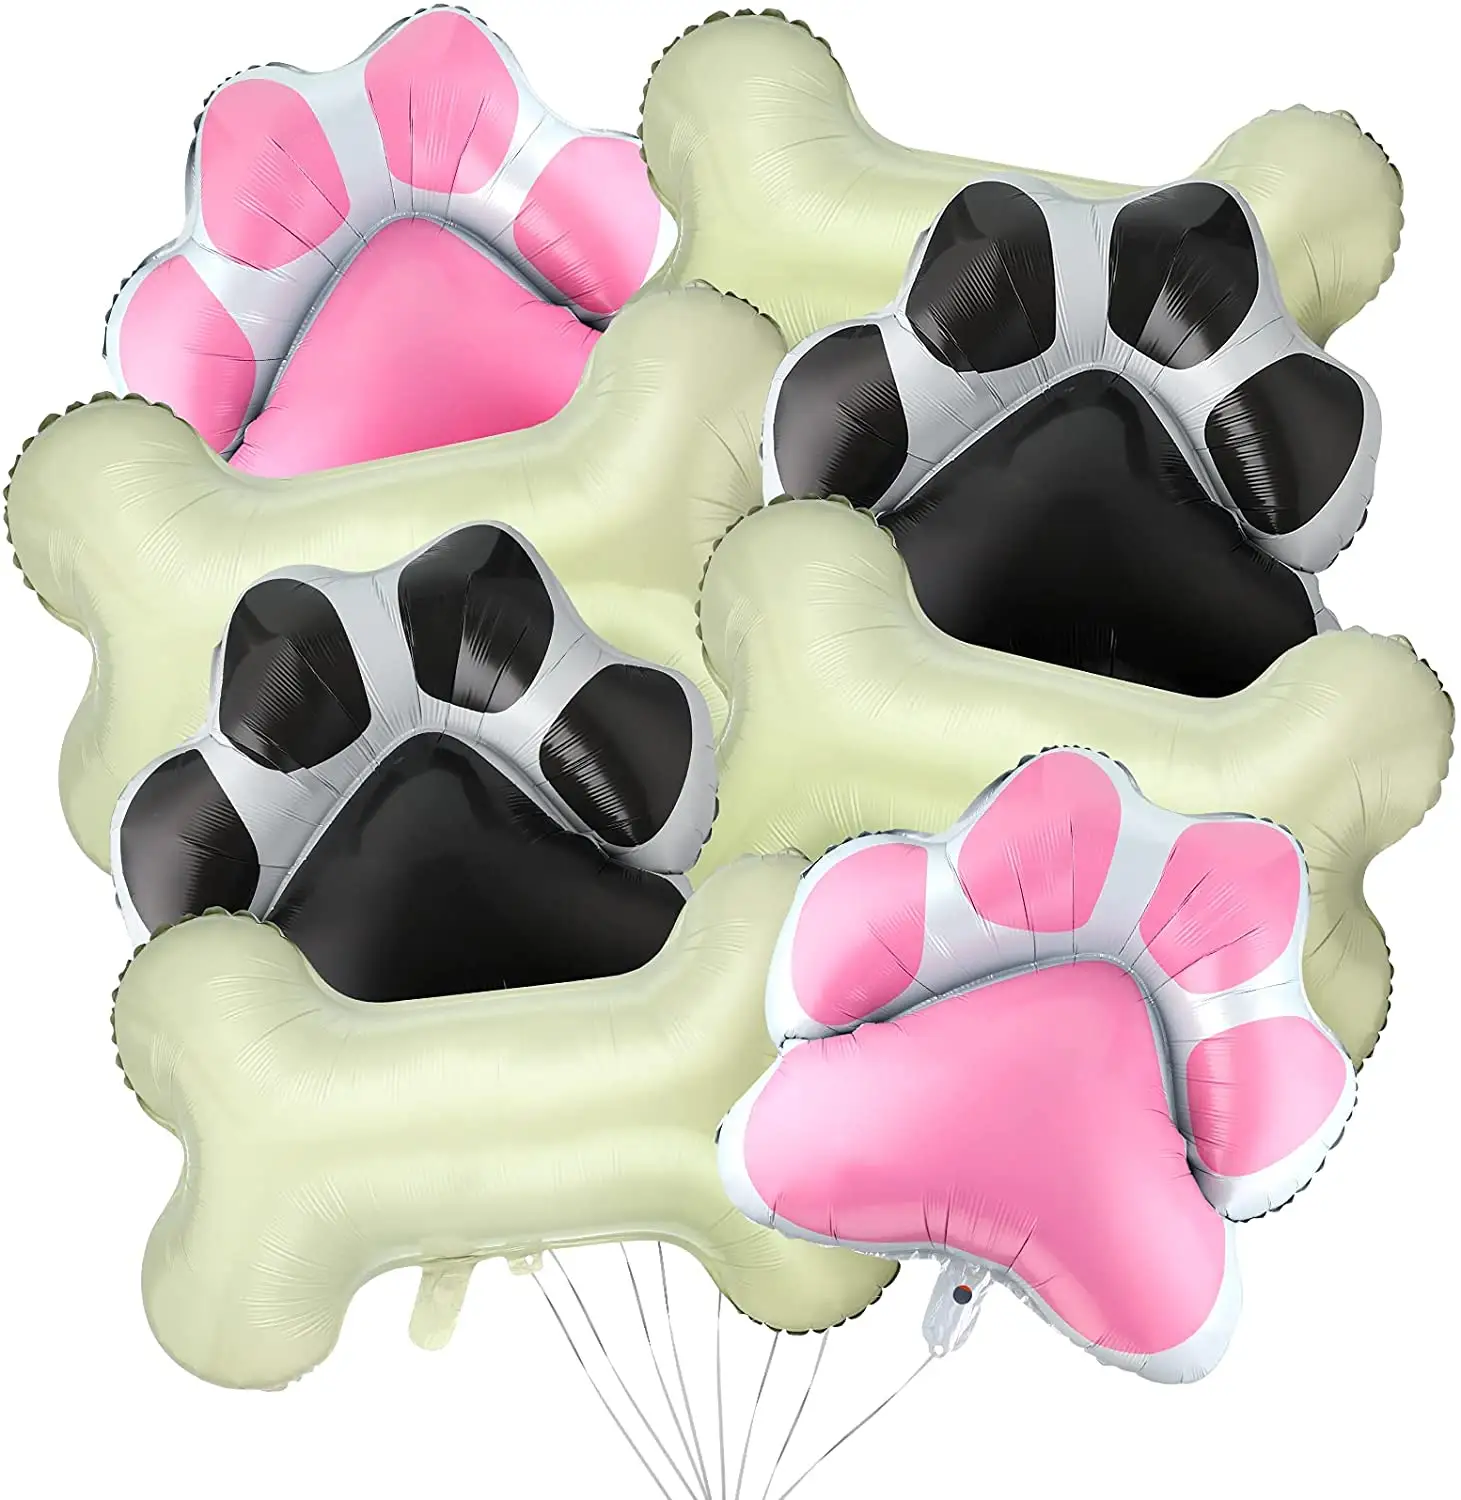 Köpek doğum günü parti balonlar seti köpek tema parti dahil gri pembe köpek pençe baskı balonlar ve köpek kemik balonlar evcil hayvan